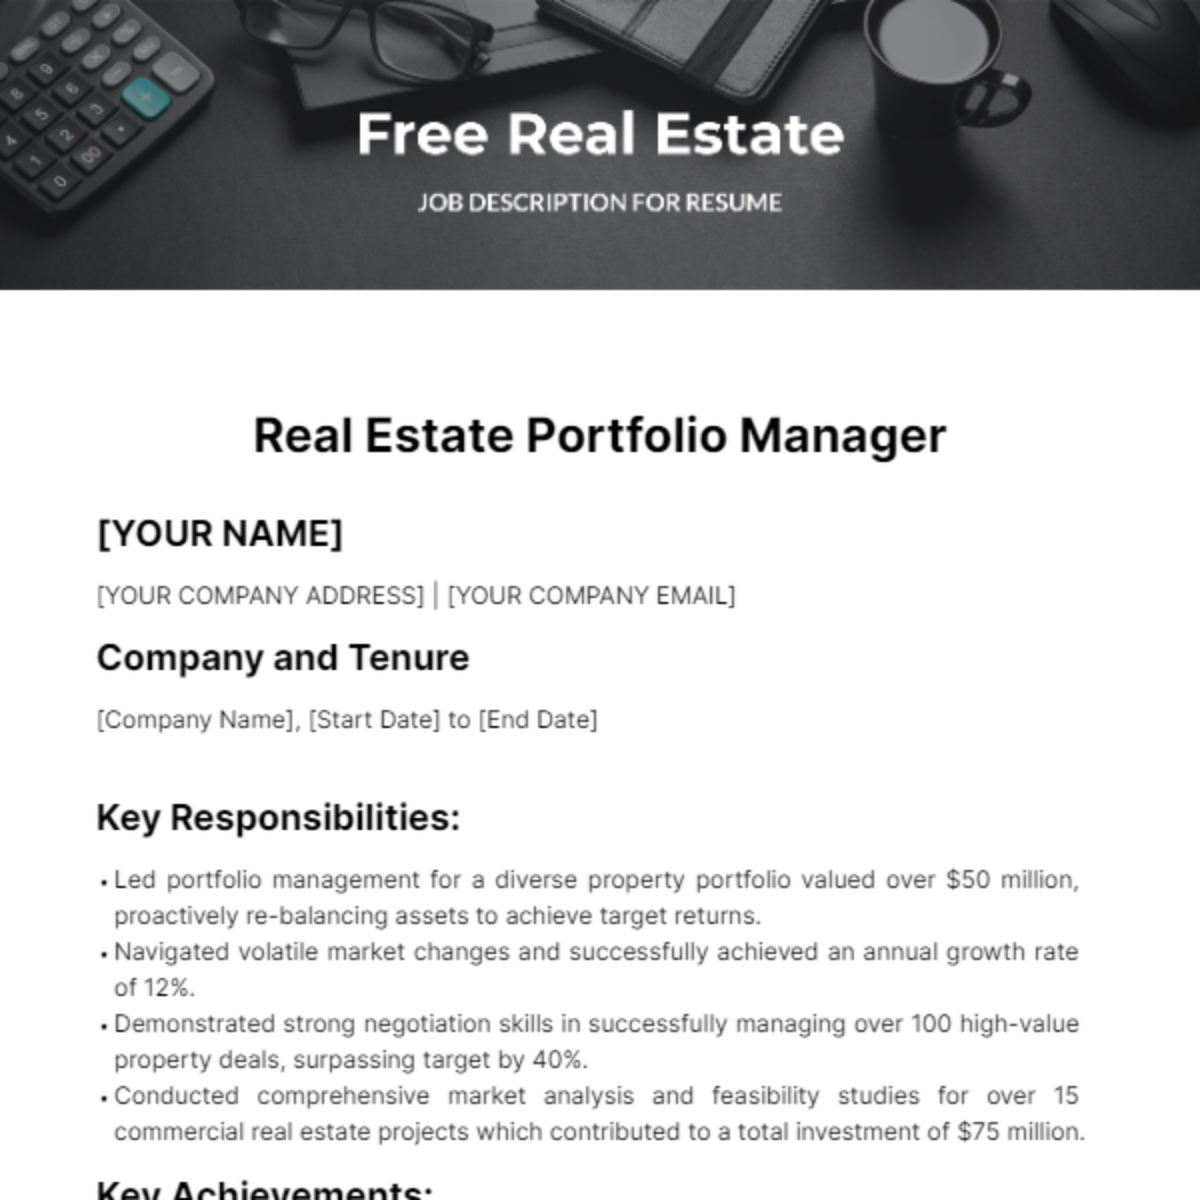 Real Estate Job Description for Resume Template